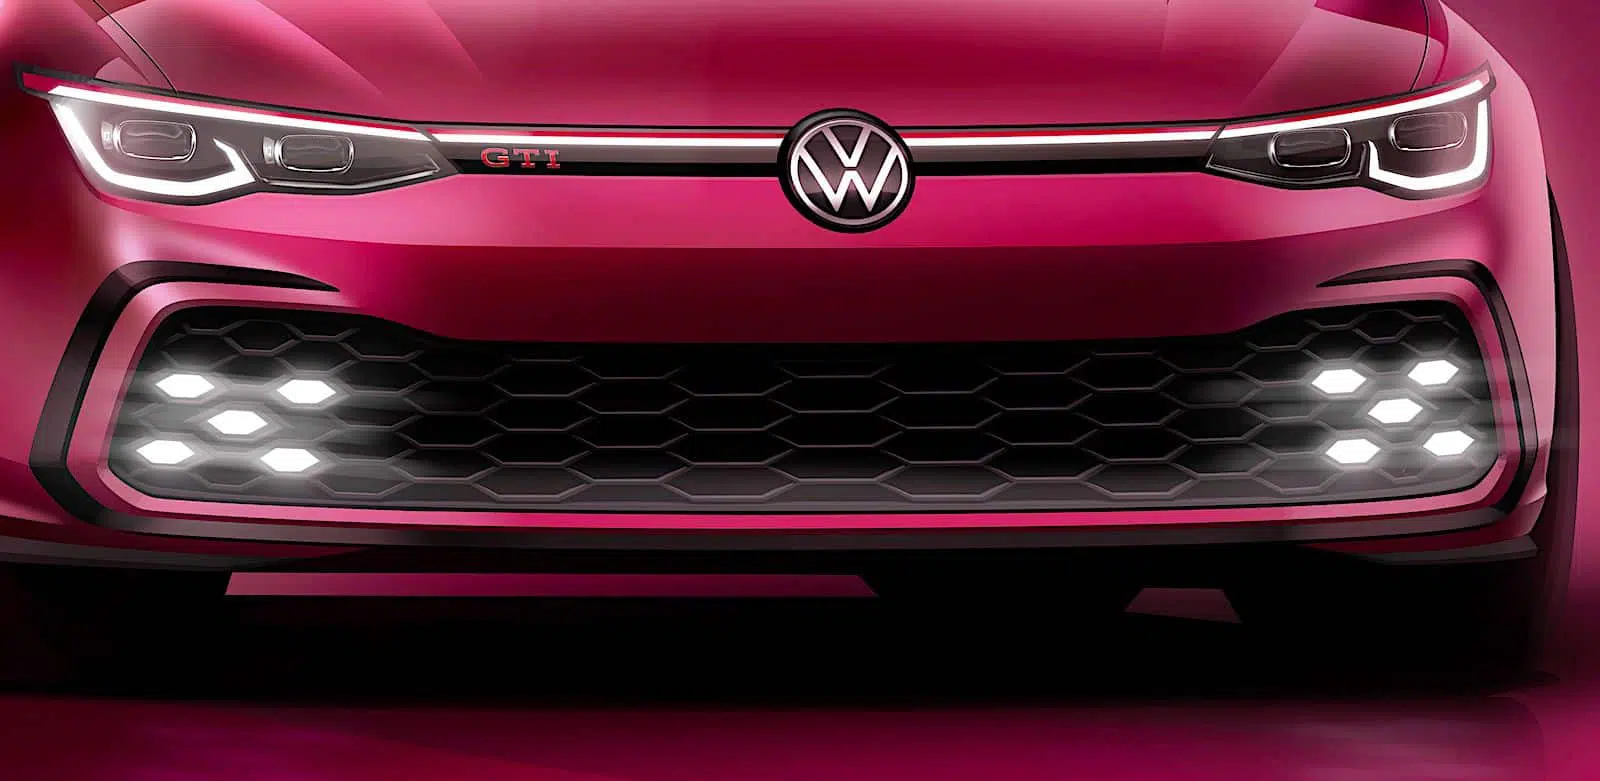 Volkswagen Golf Gti 2020 Teaser